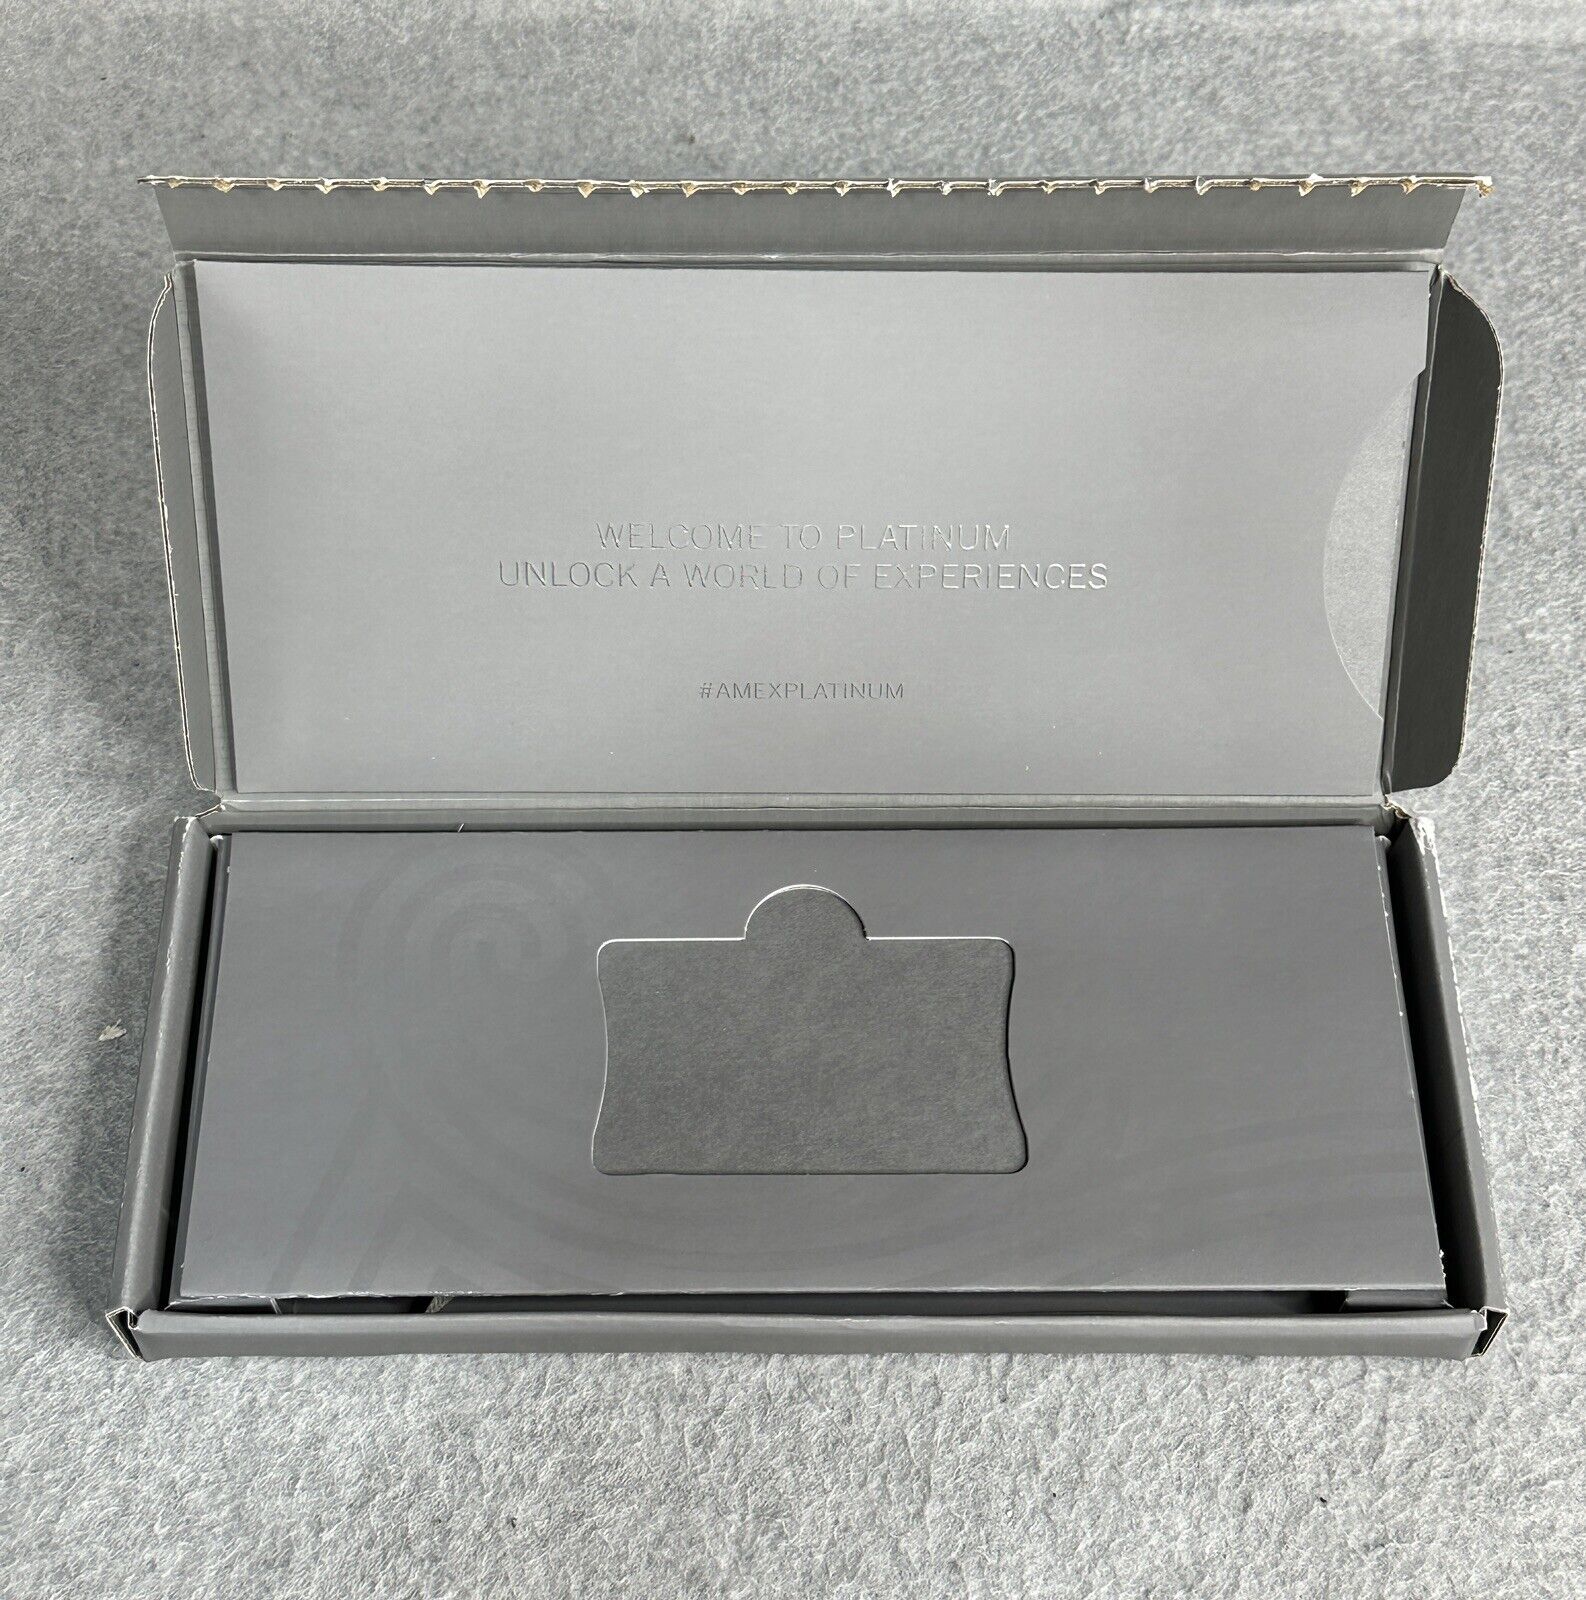 American Express Platinum Welcome Box - NO CARD